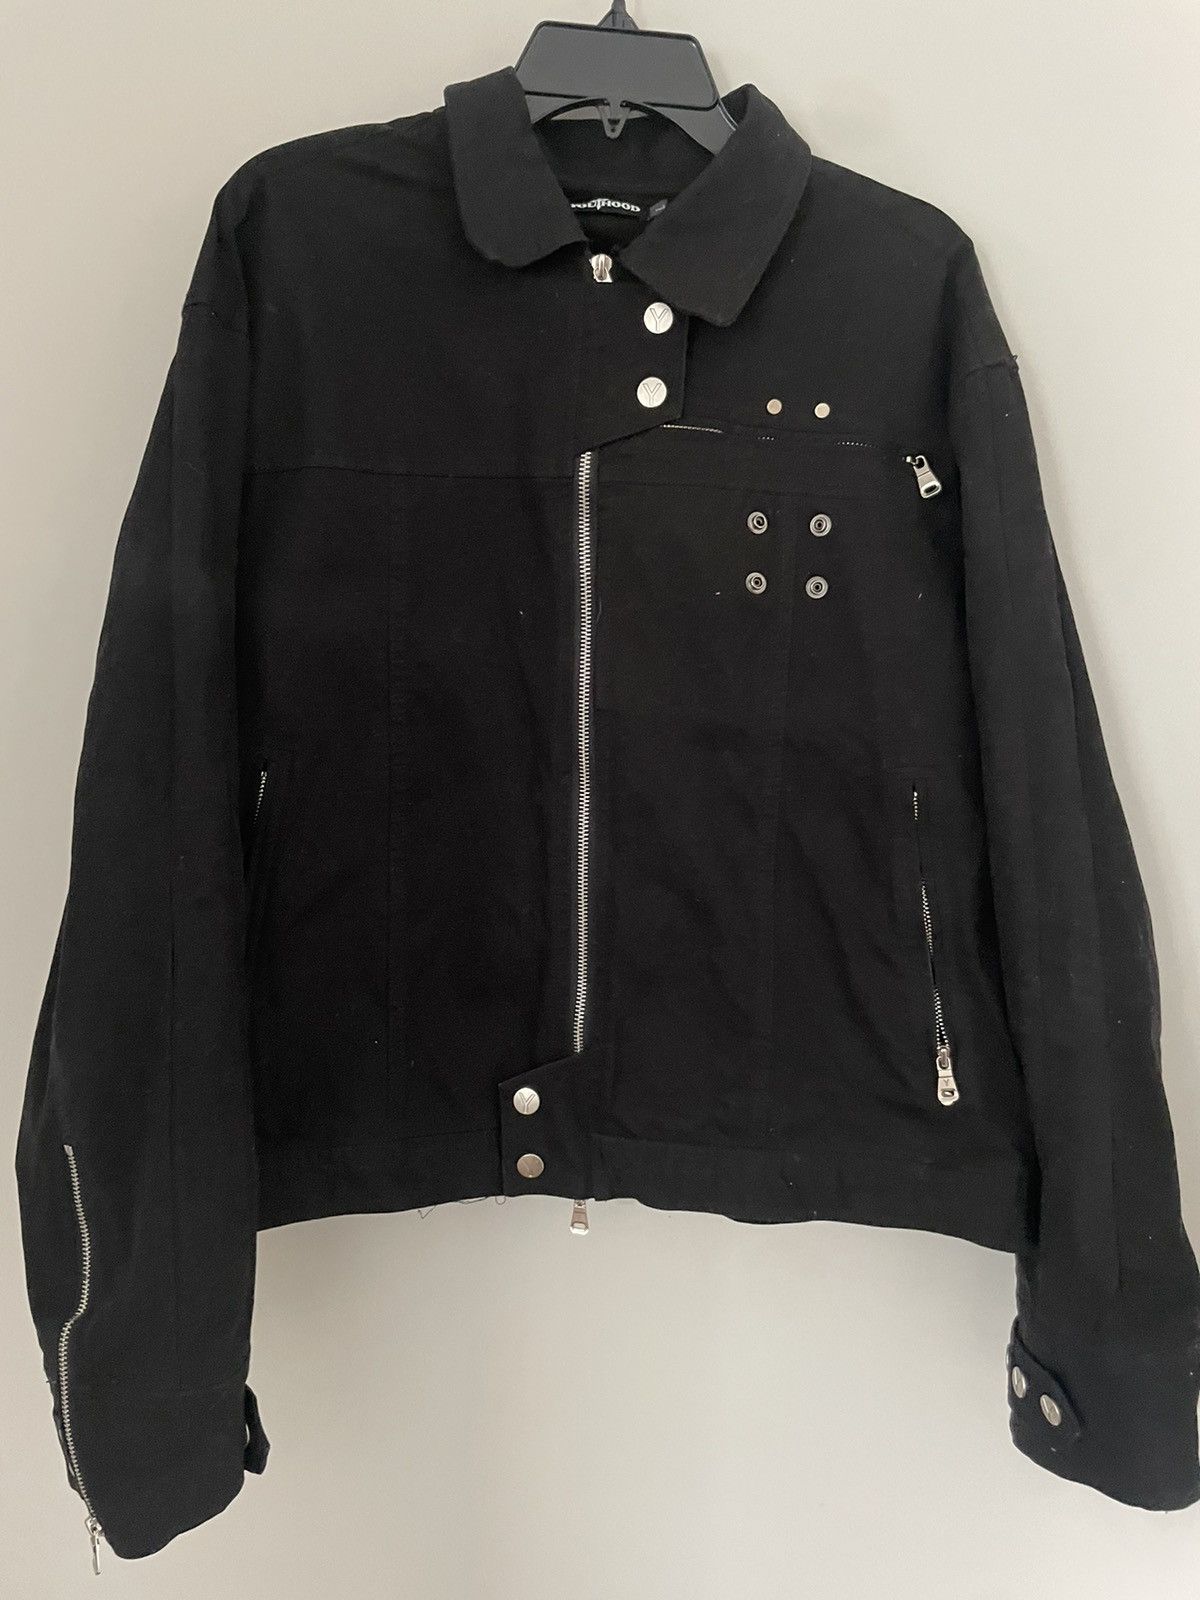 Streetwear Youthood Y utility jacket | Grailed